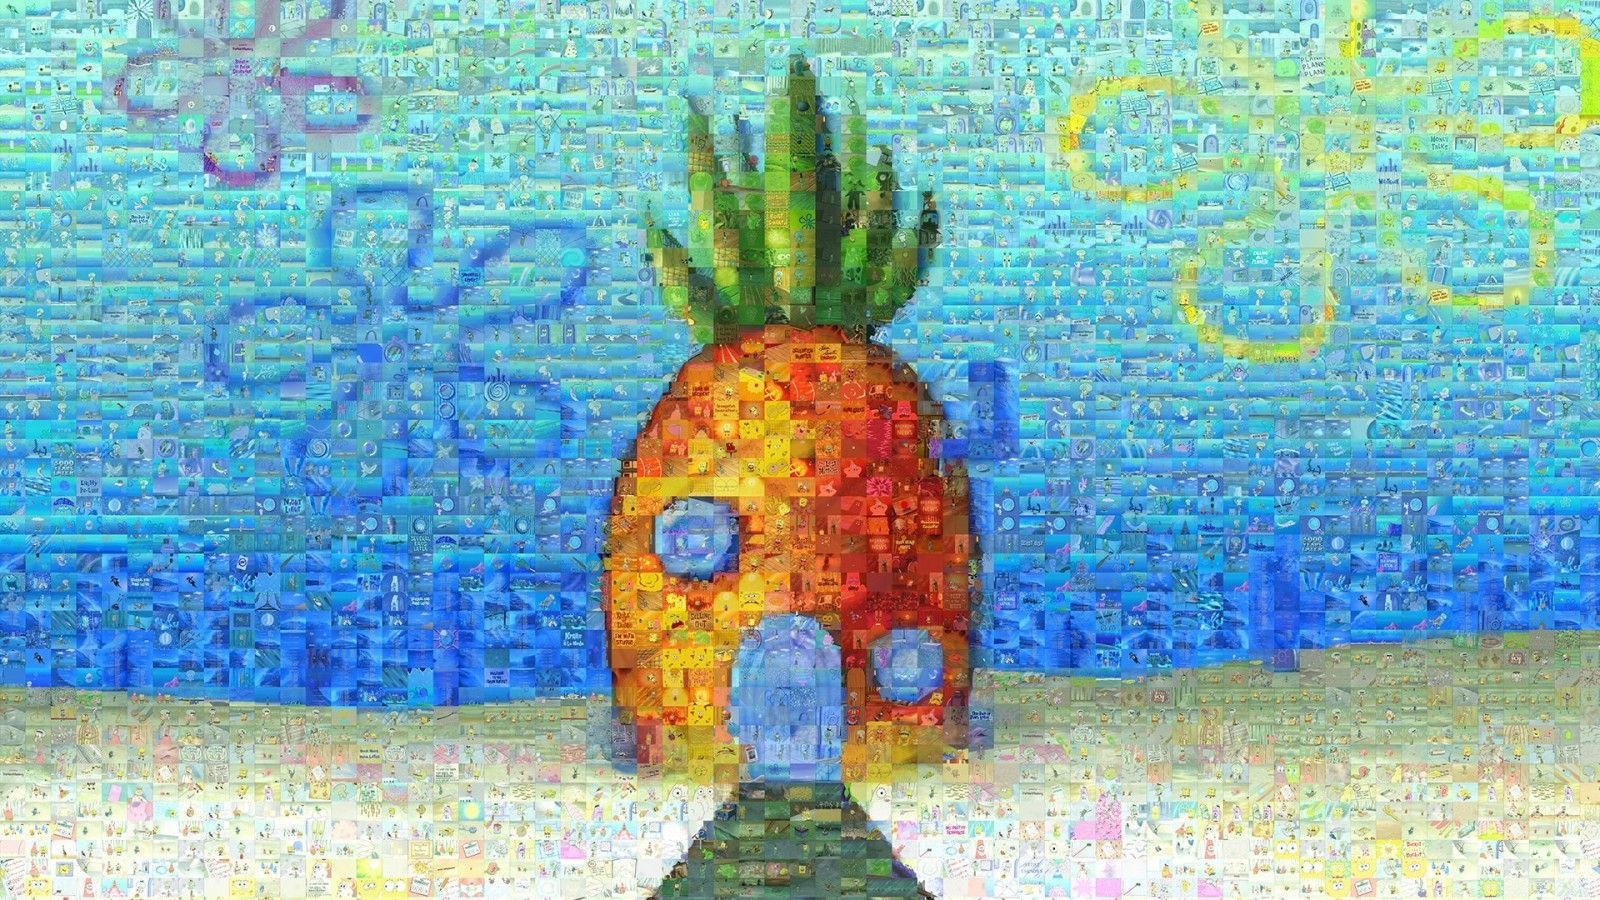 Wallpaper, painting, collage, cartoon, pineapples, SpongeBob SquarePants, pineapple, ART, tree, plant, fauna, 1920x1080 px, organism, child art 1920x1080